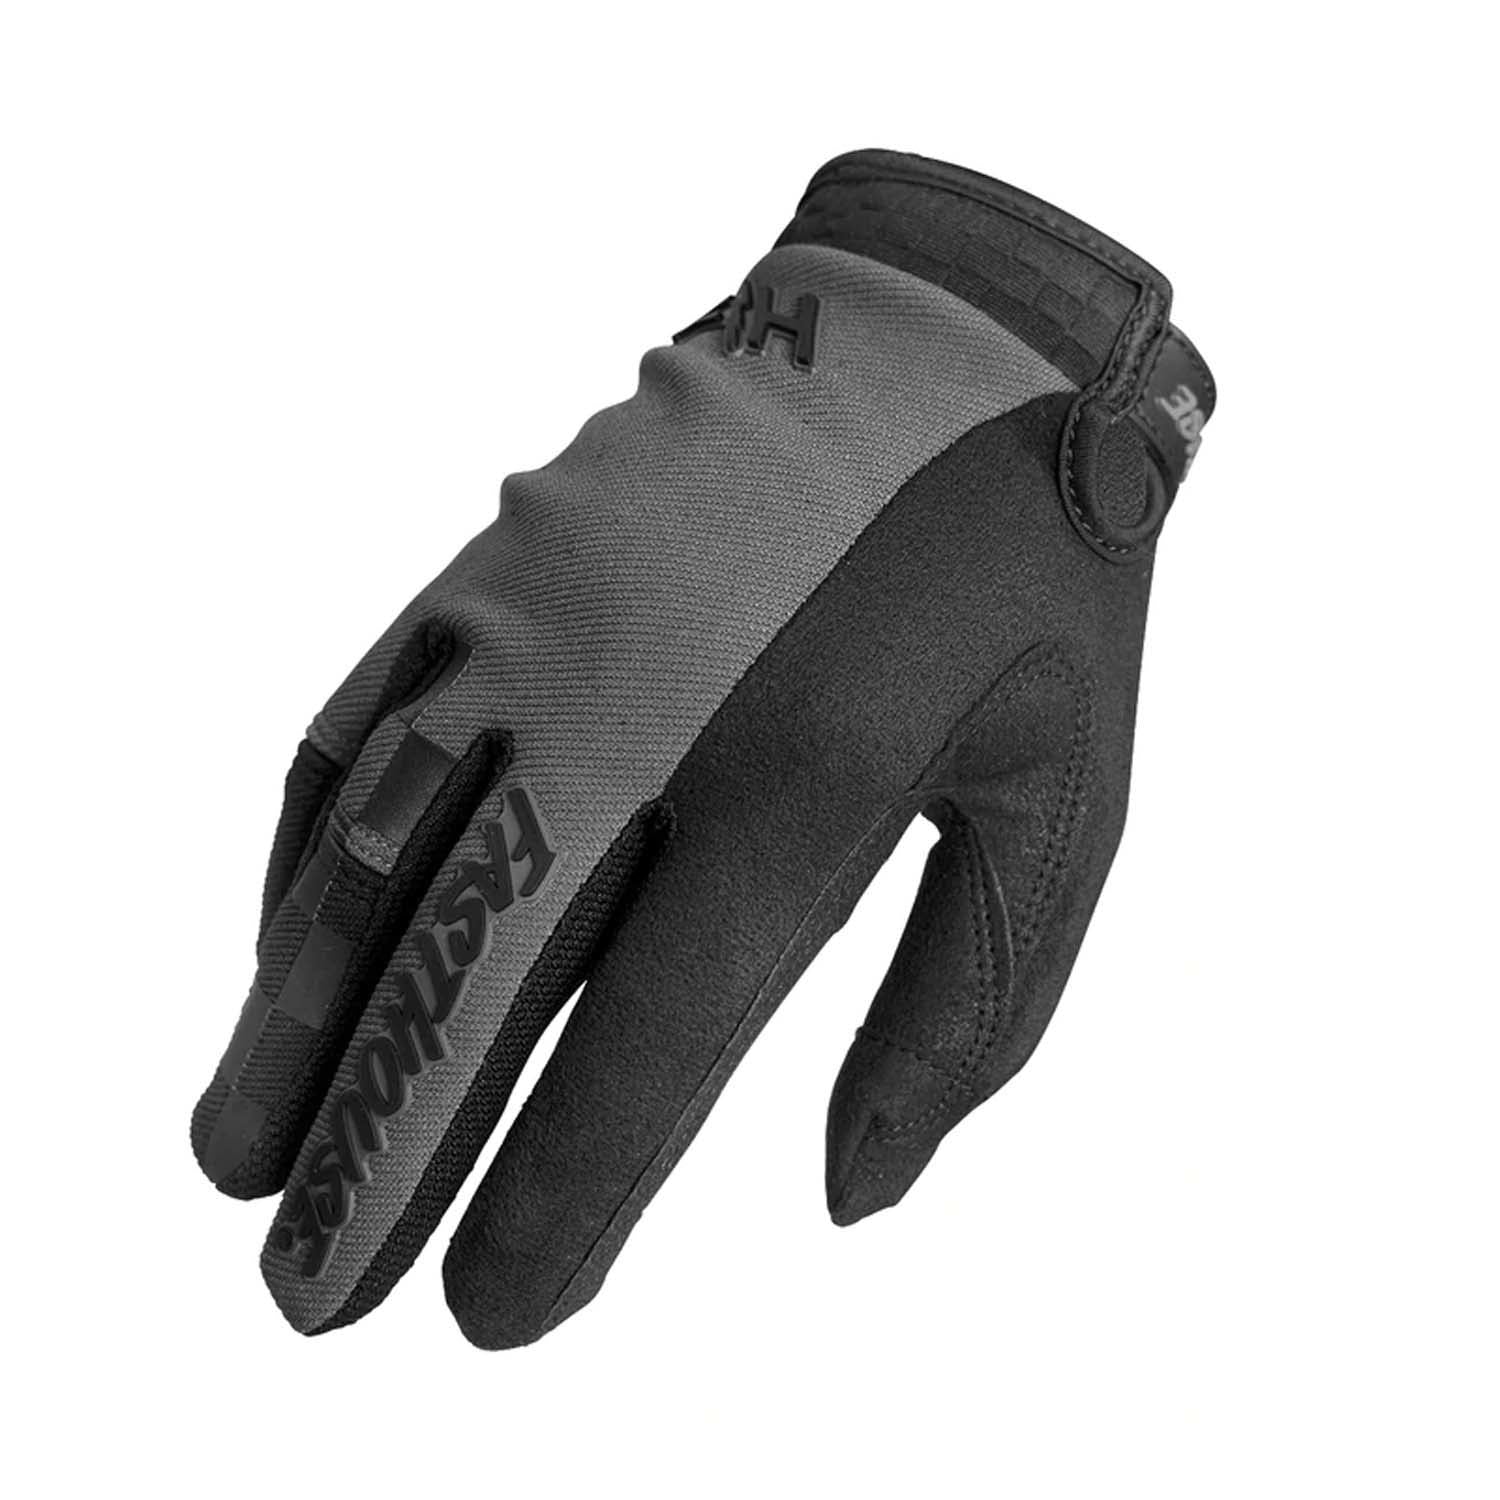 Fasthouse Speed Style Glove - Sale Ridgeline - Gray Black Bike Gloves